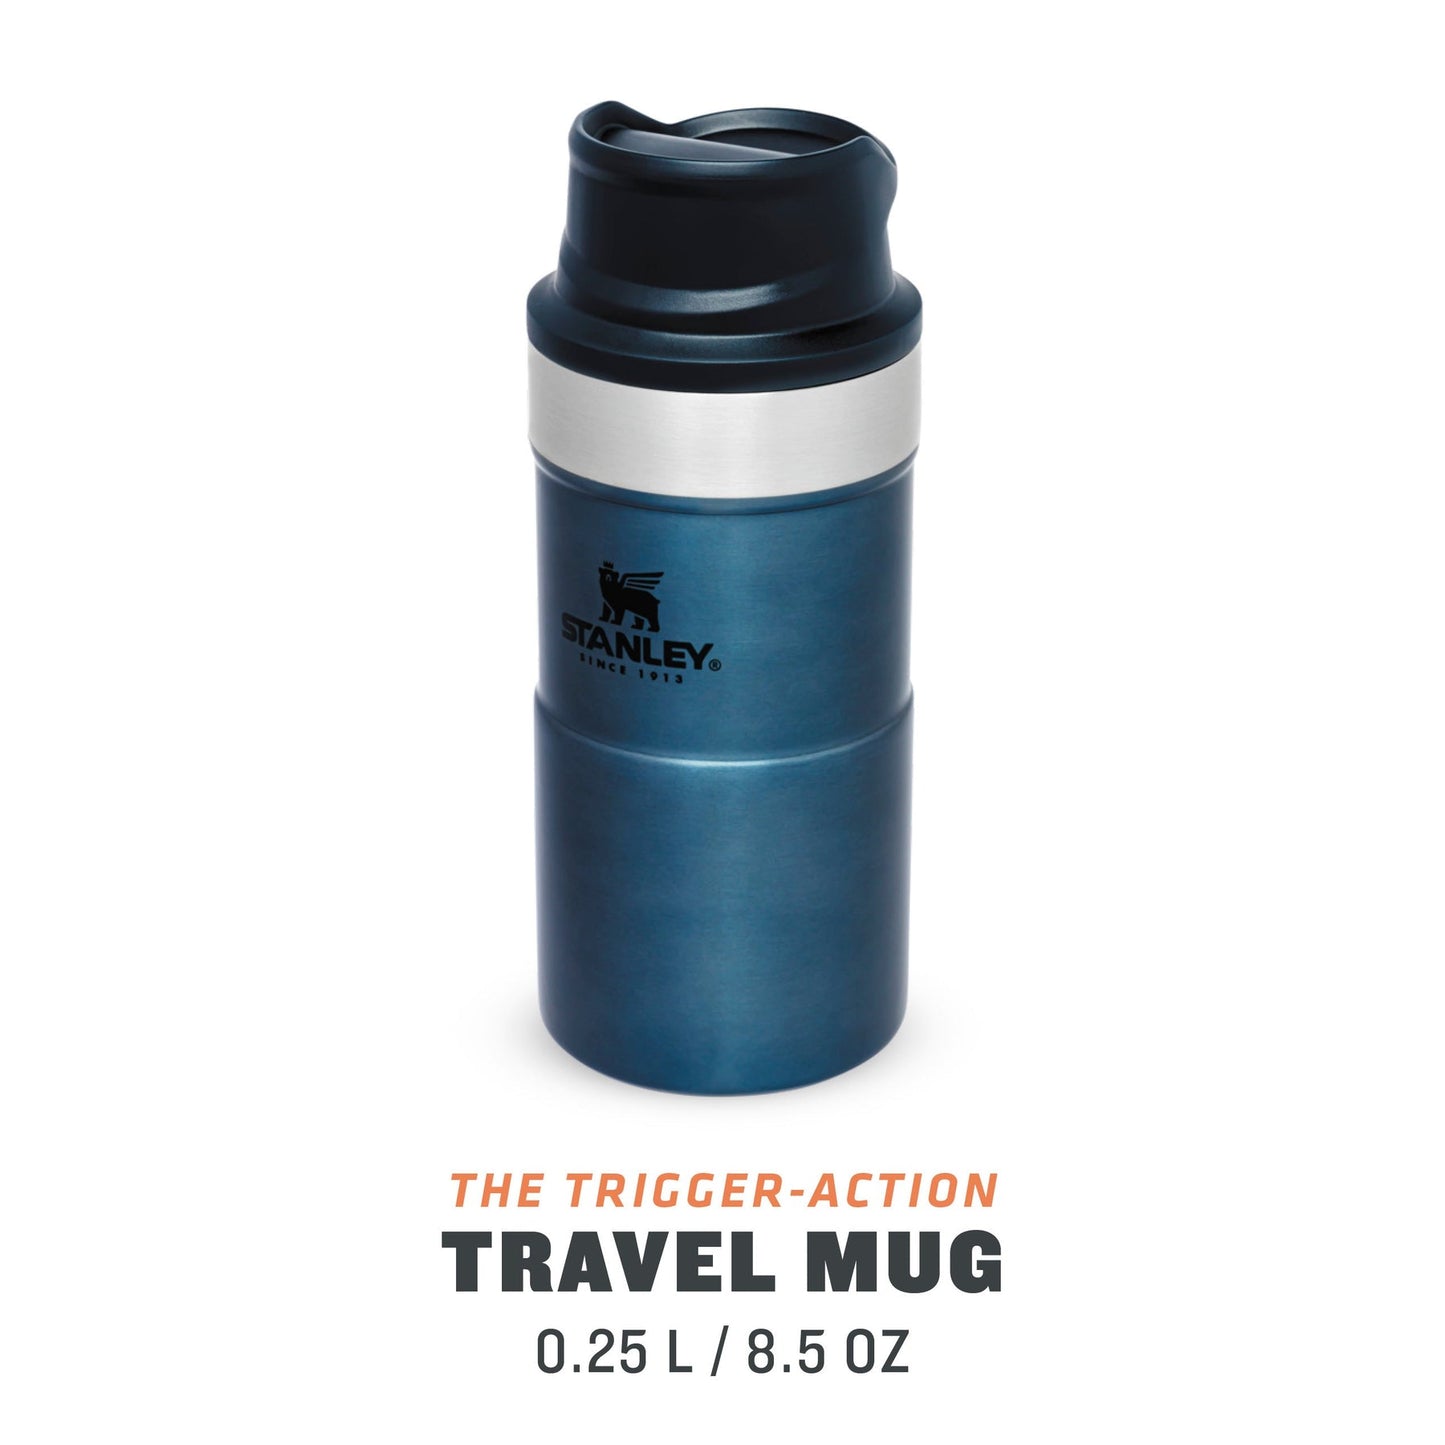 Stanley 0.25L İnce Gövde Classic Trigger-Action Travel Mug - Lacivert